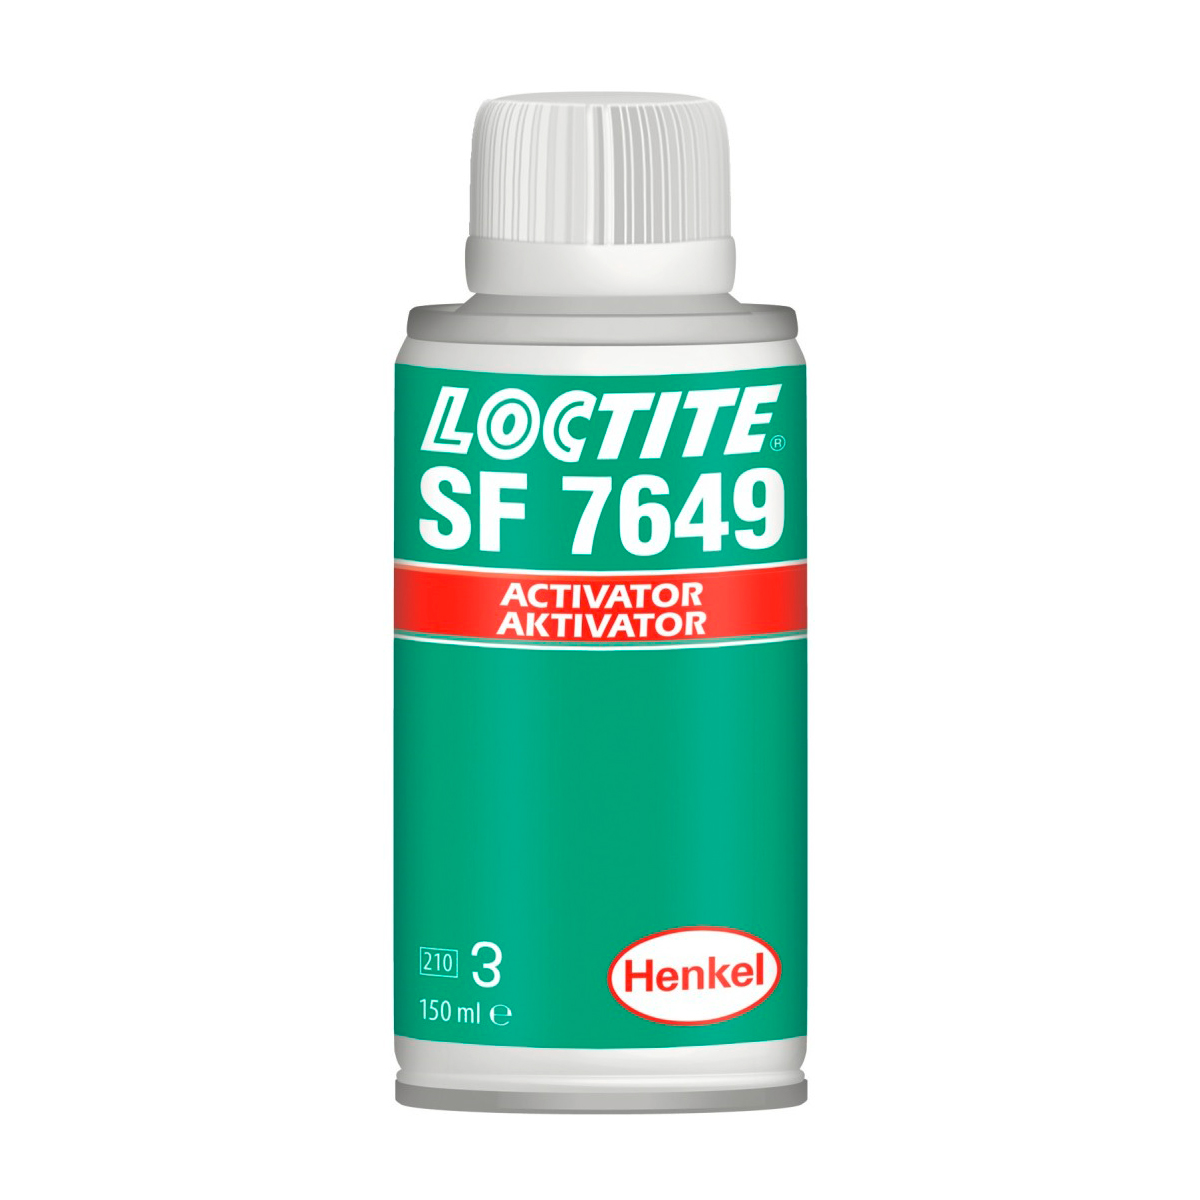 Loctite SF 7649 Activator, 150 ml